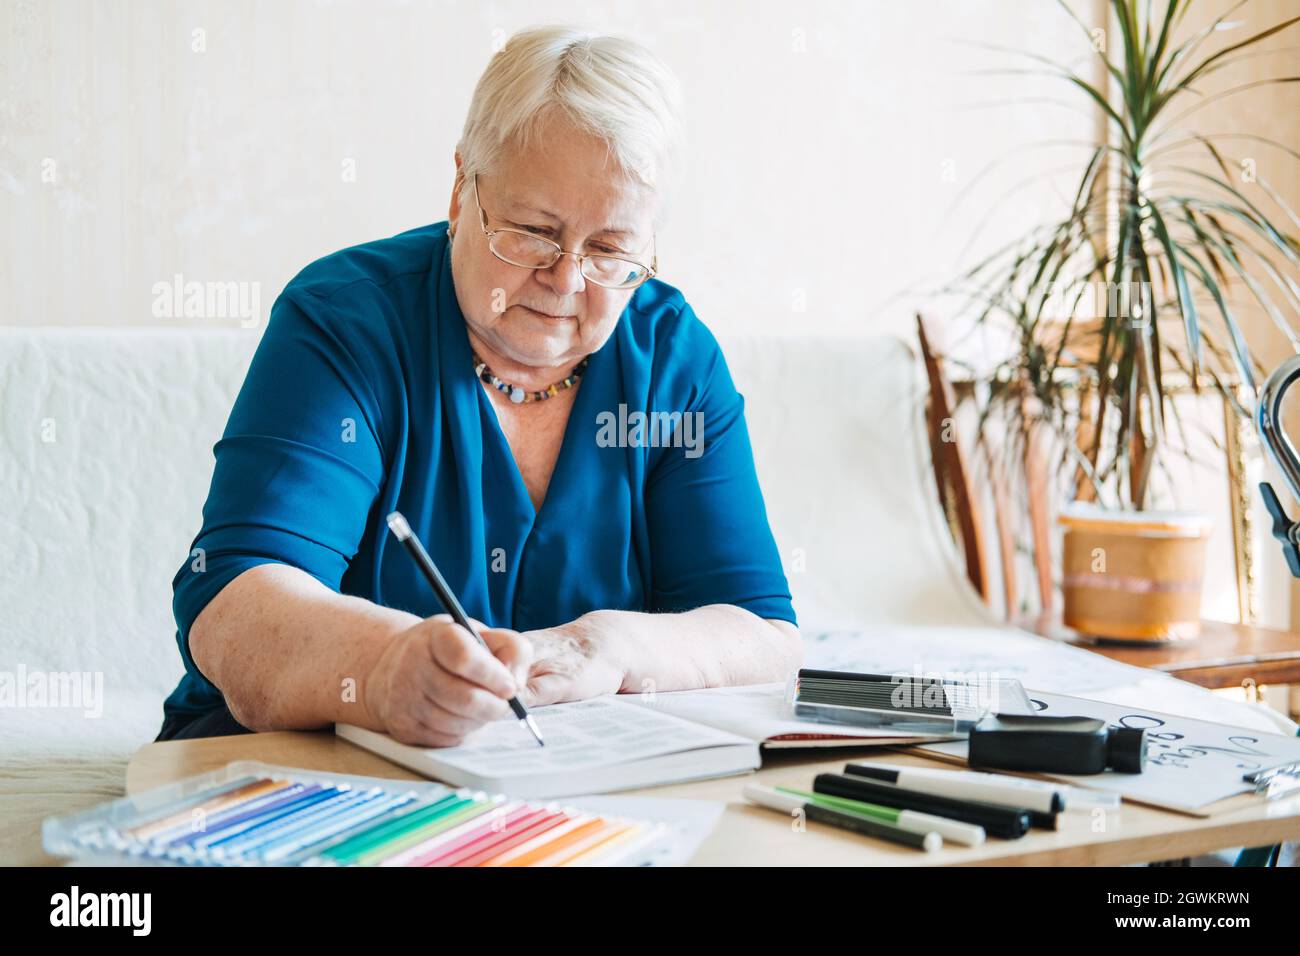 Hobby Ideas For Older People Retirement Hobbies Pastimes For Seniors Activities For Seniors 3865